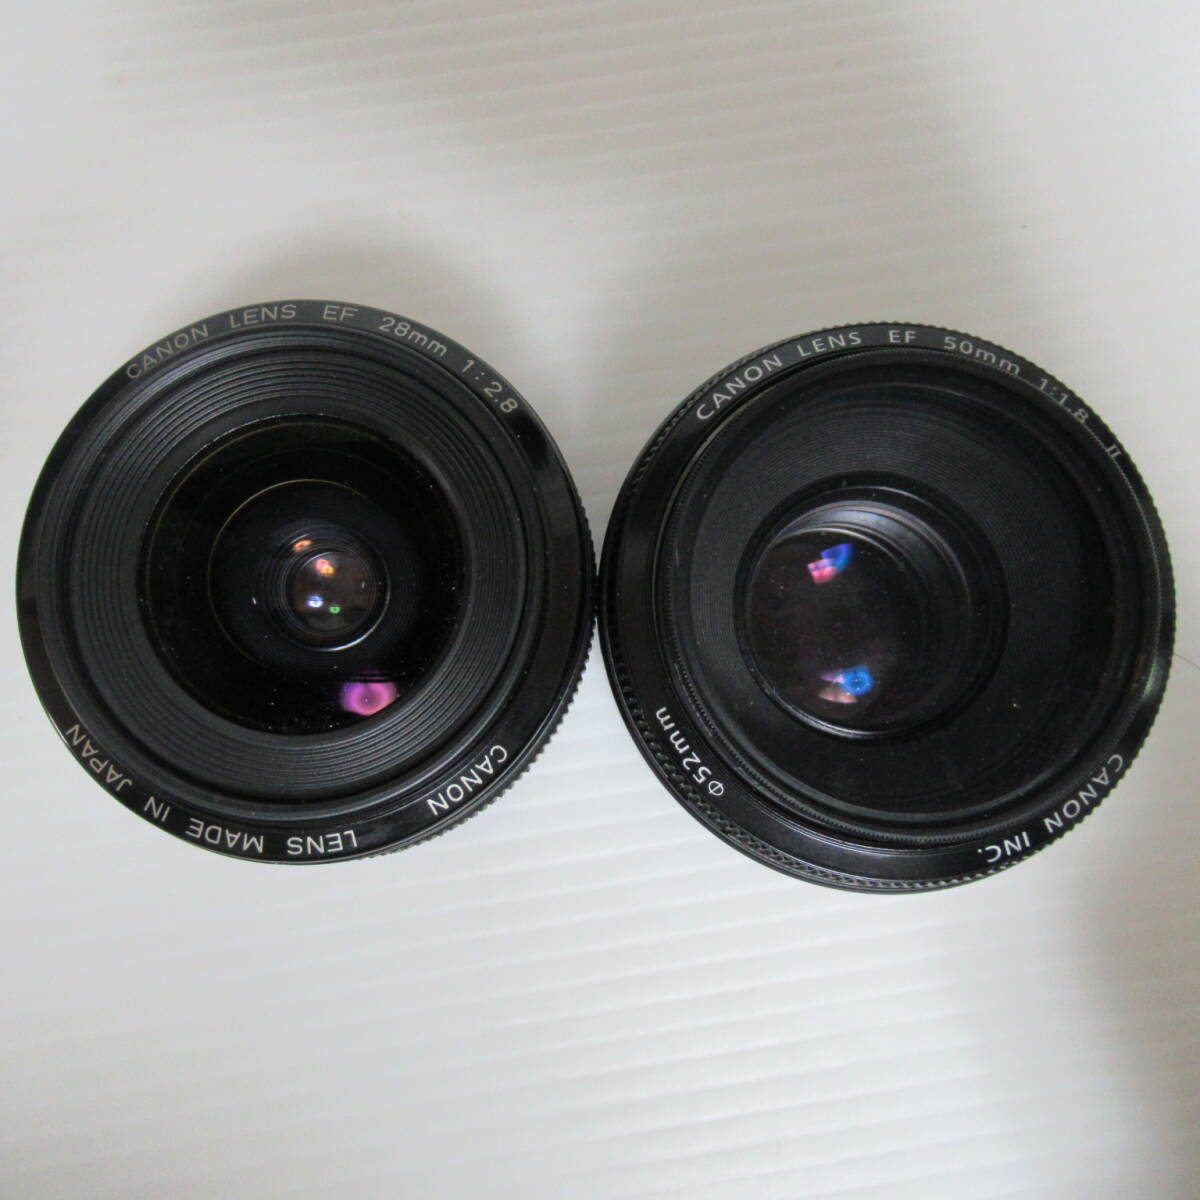  camera Canon EOS 70D case attaching camera lens . summarize set operation not yet verification canon 80 size shipping p-2585209-302-mrrz